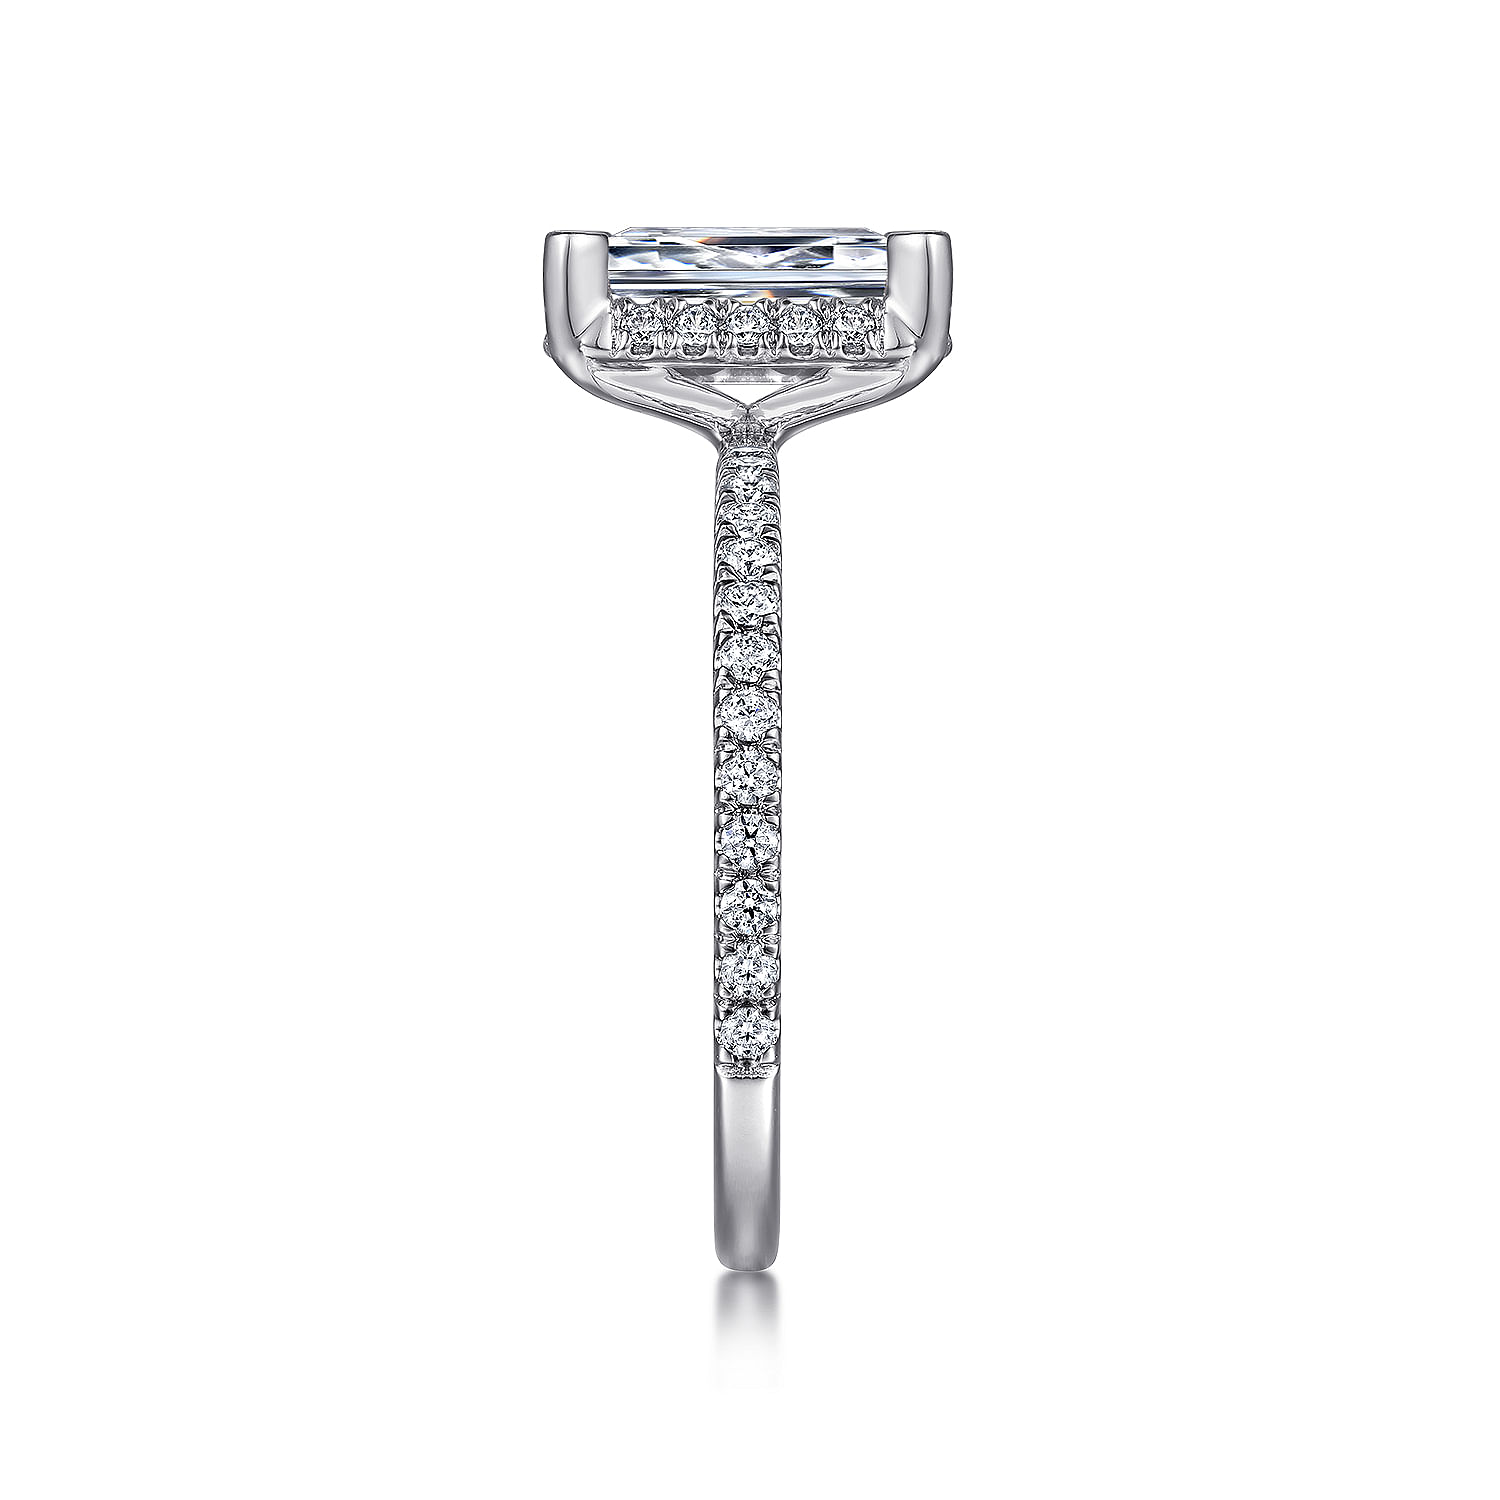 14K White Gold Hidden Halo Emerald Cut Diamond Engagement Ring